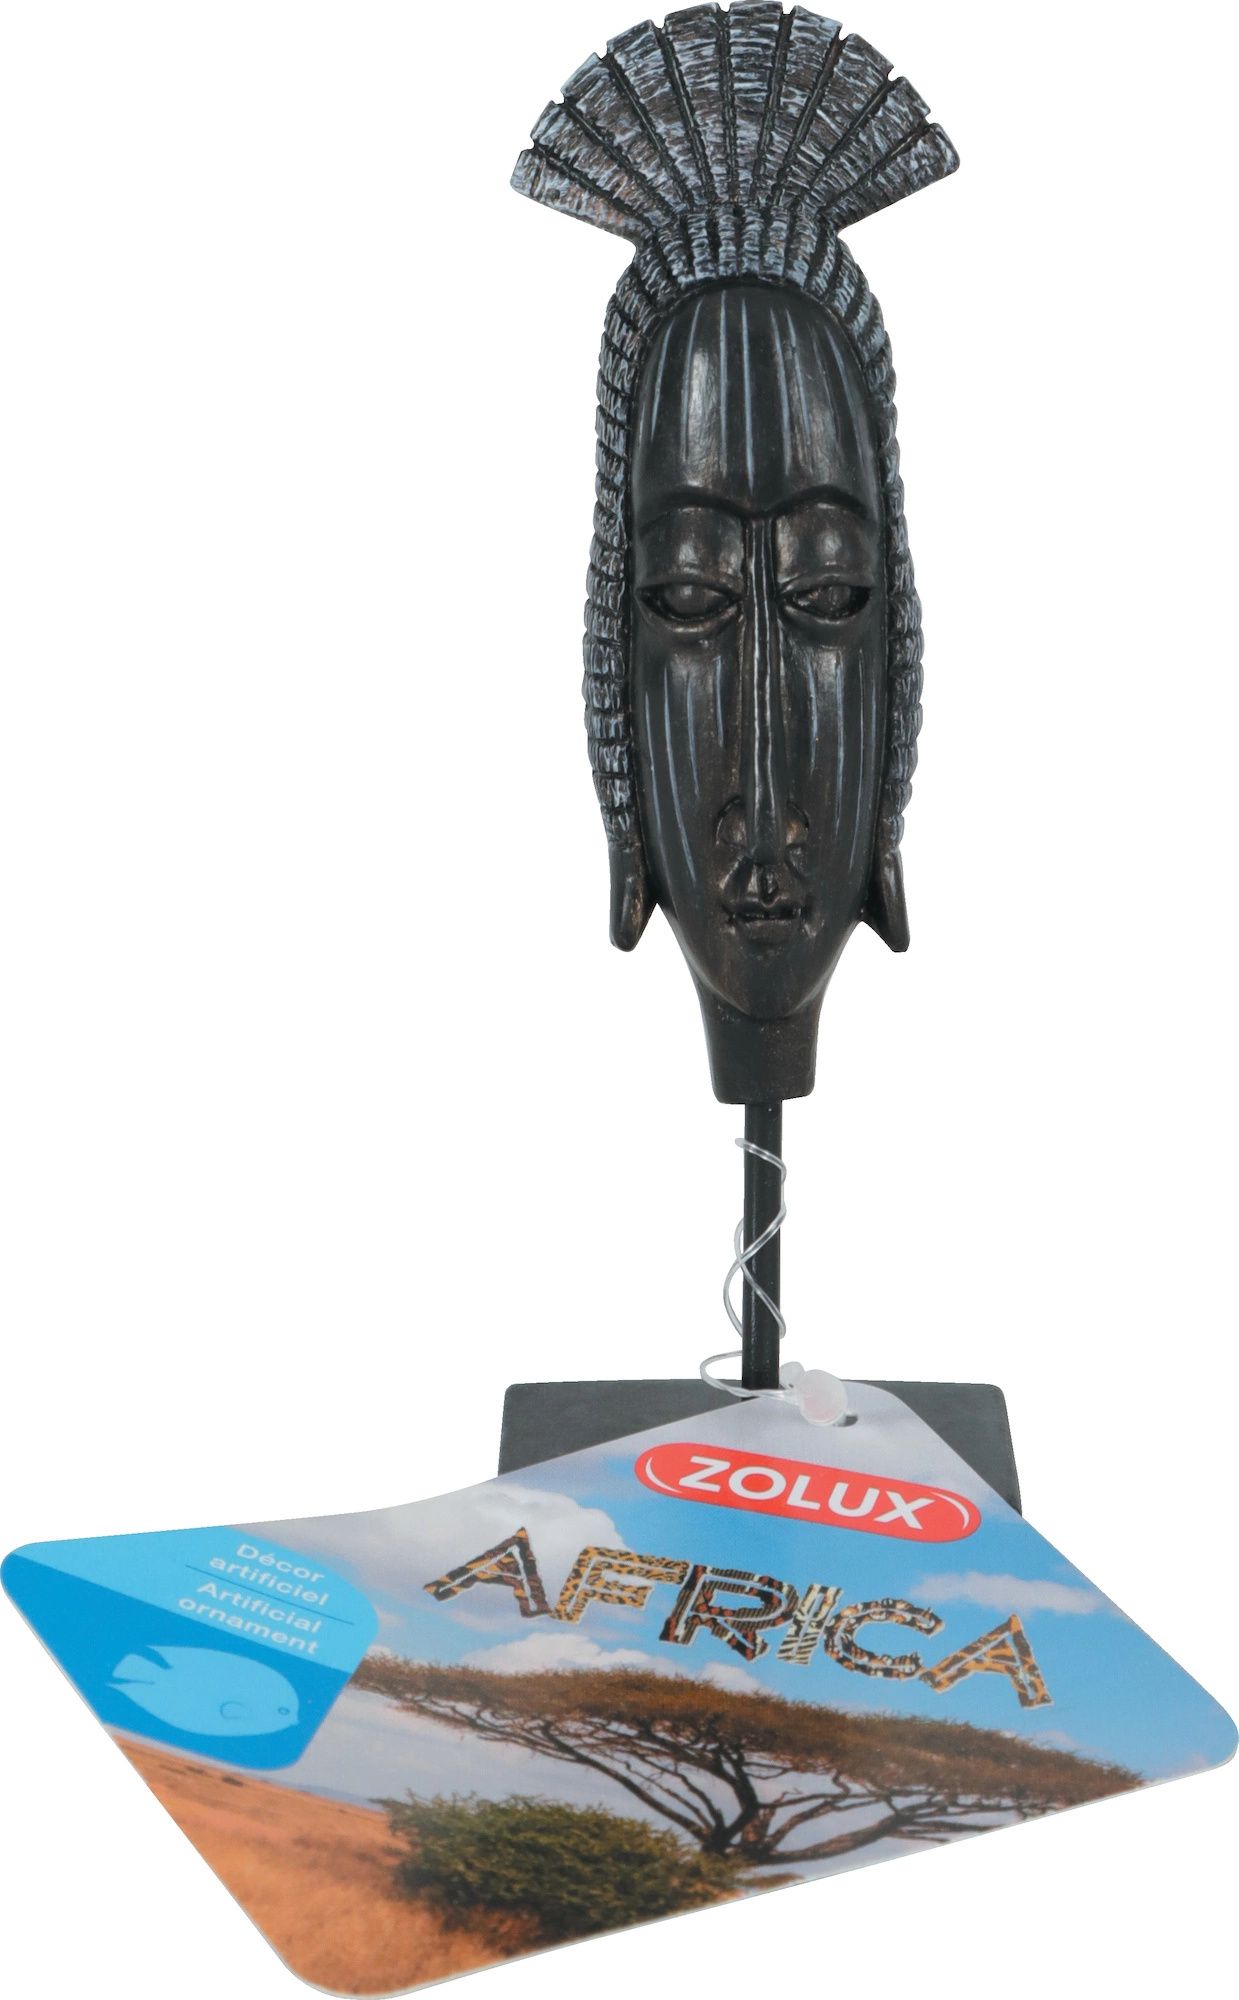 Zolux Dekoracja akw. AFRICA maska zenska S 9539845 (3336023522166)